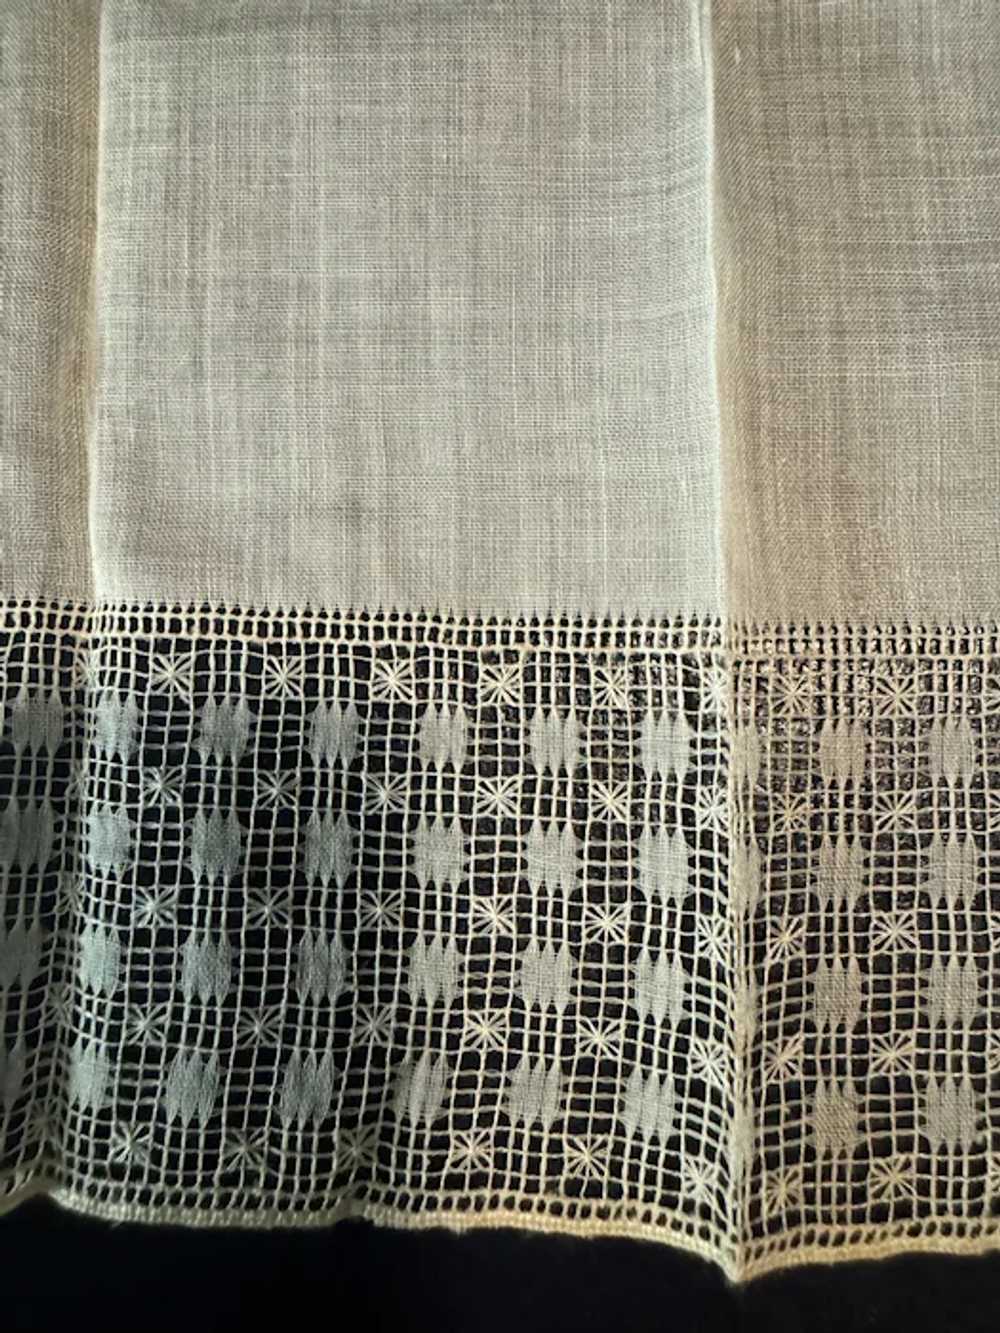 vintage  lace Hankie  detail - image 4